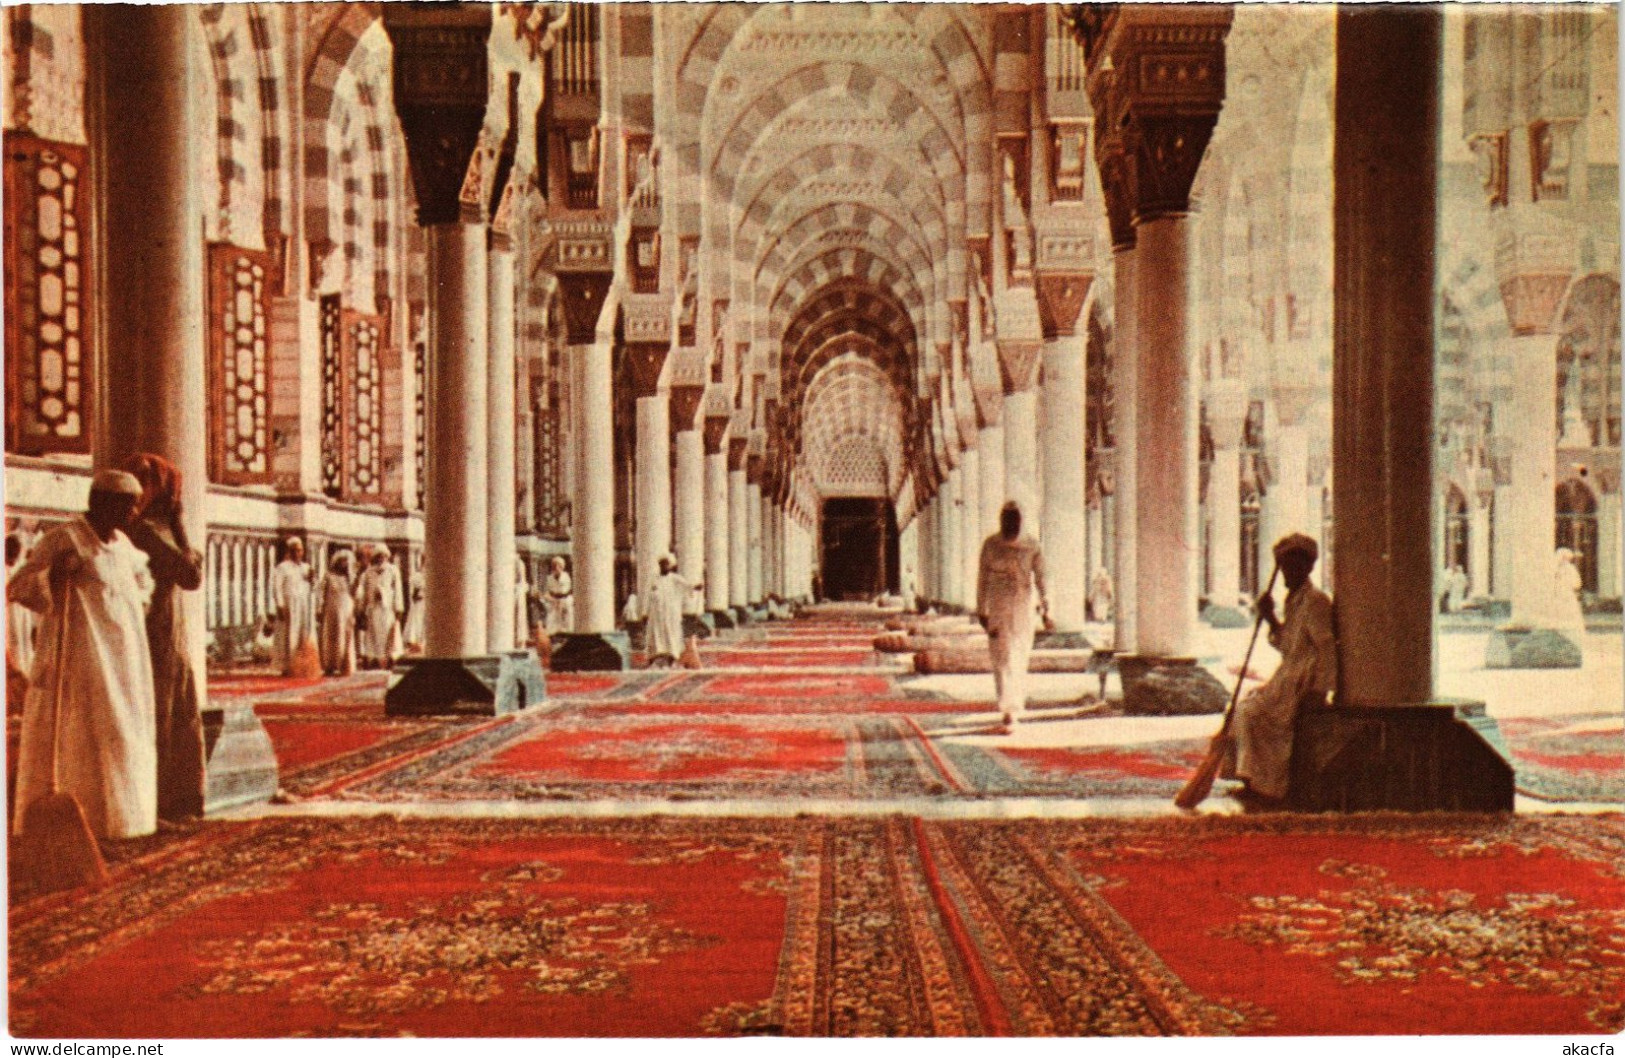 CPM Medina Prophet's Holy Mosque SAUDI ARABIA (1182970) - Saudi-Arabien